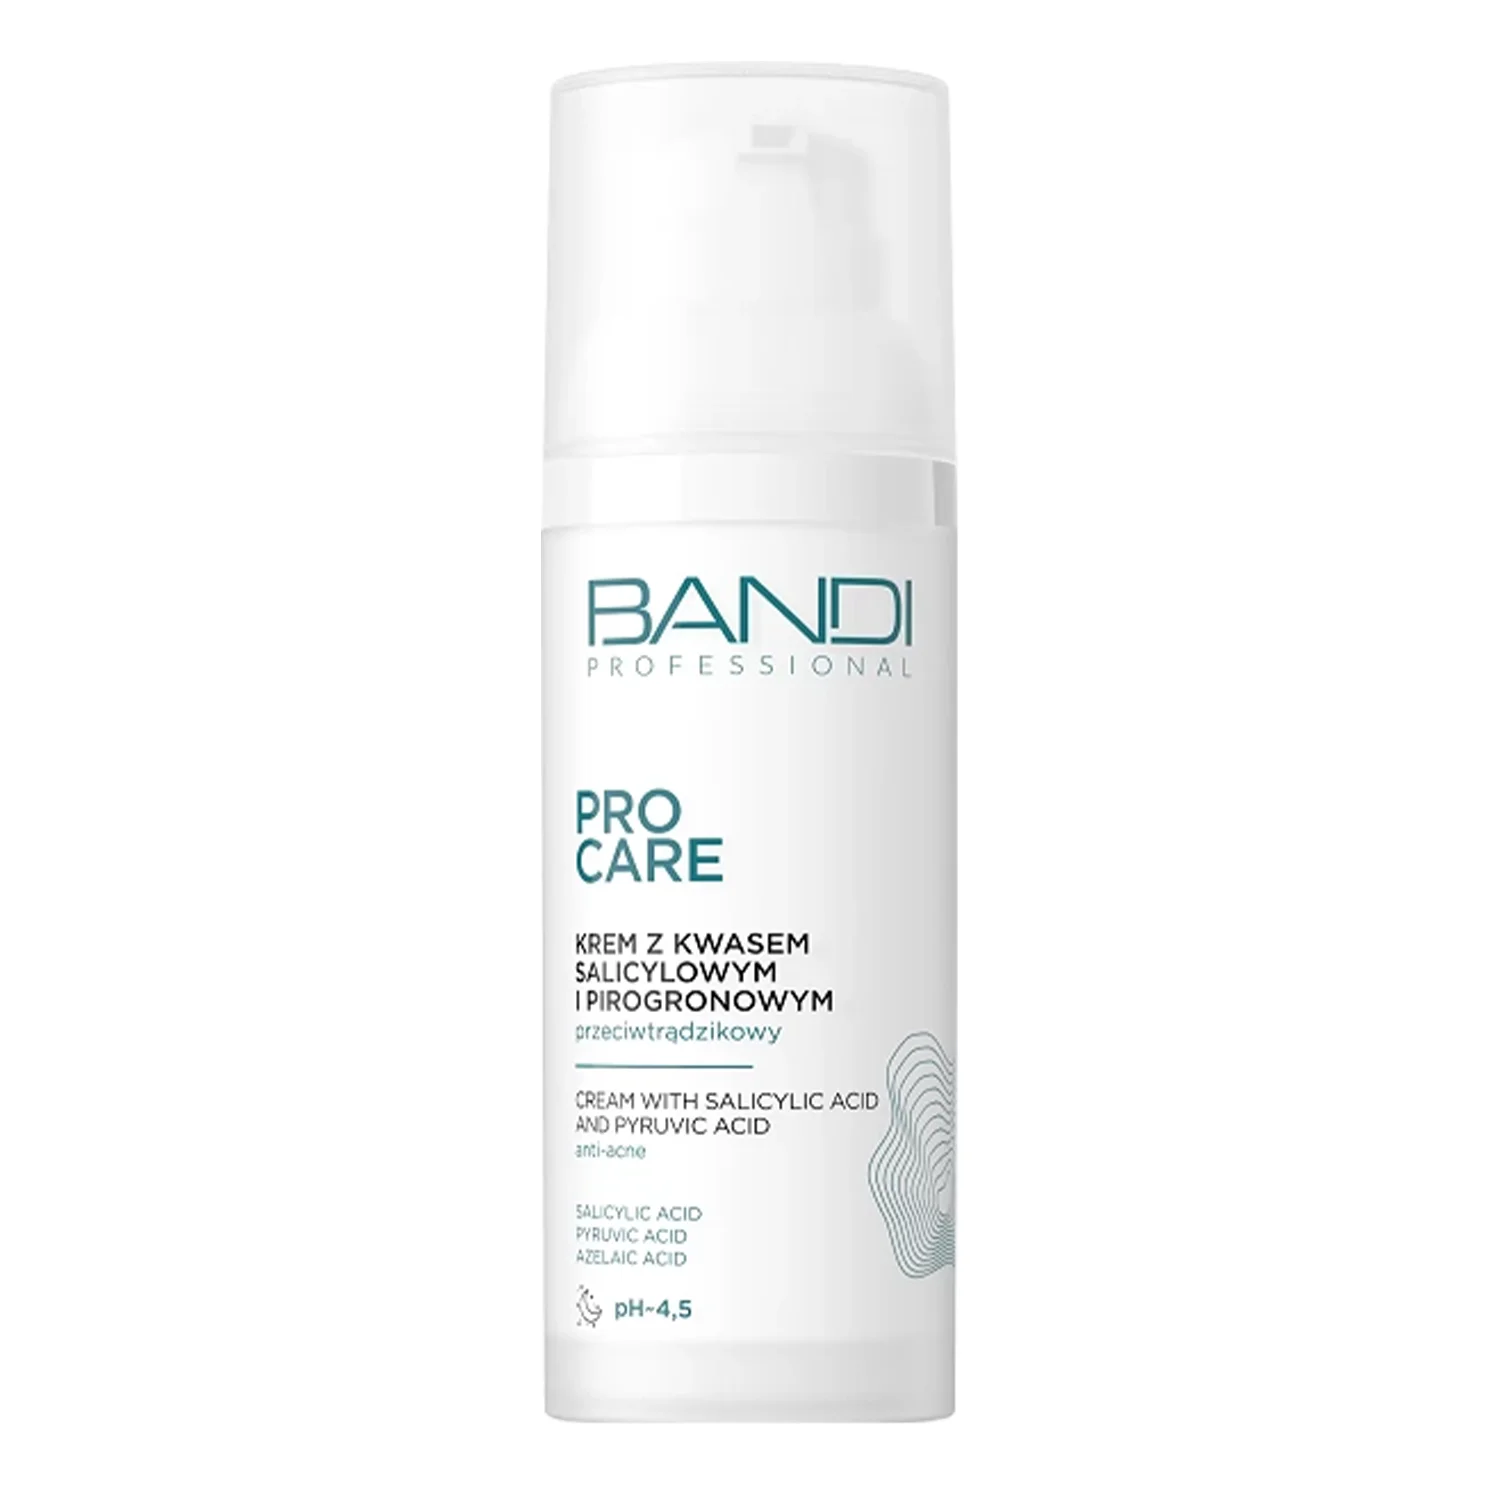 Bandi - Pro Care - Крем против акне с салициловой и пировиноградной кислотами - 50ml